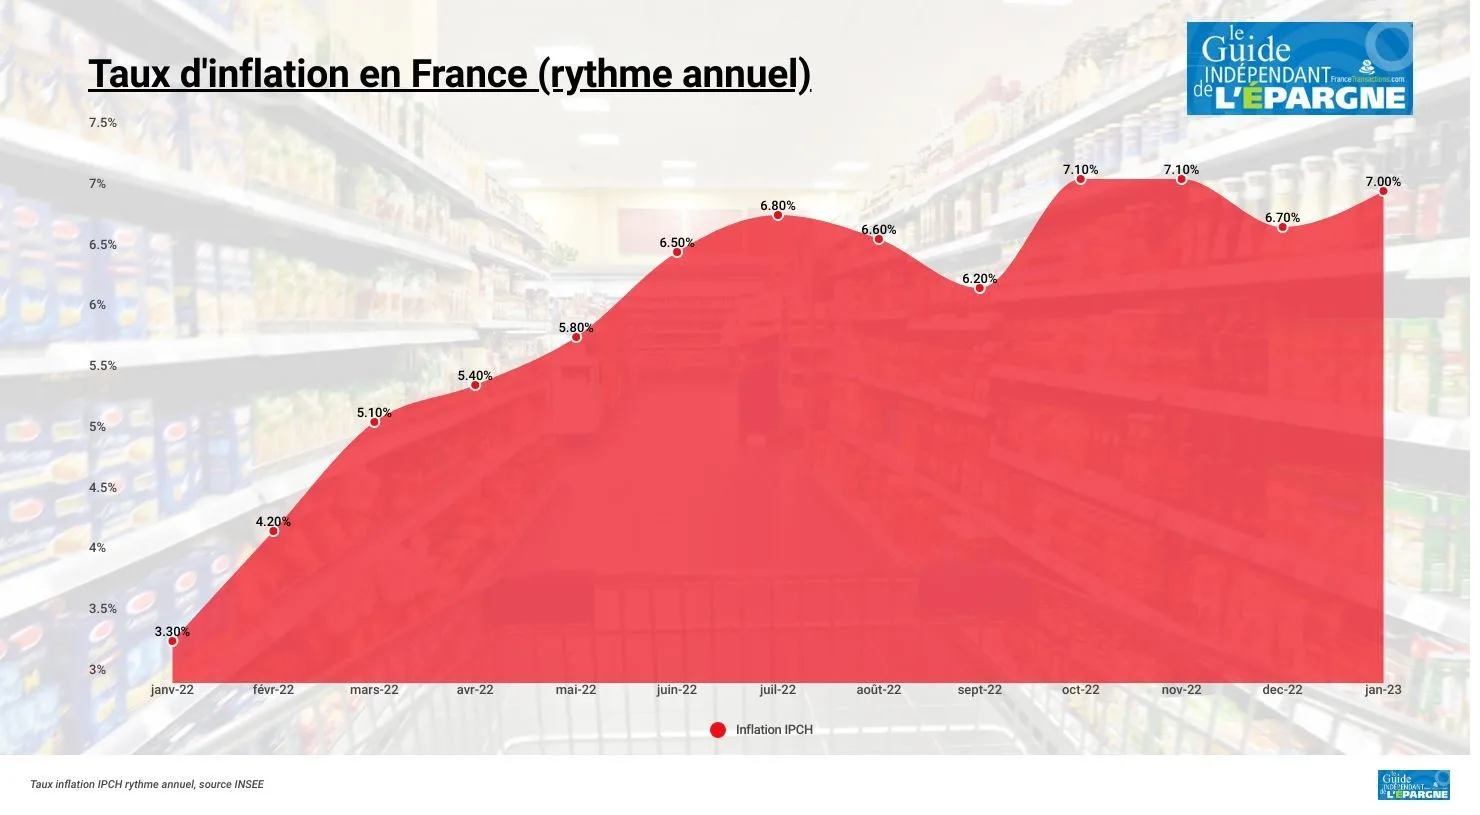 Taux d’inflation (IPCH) en France (Rythme annuel)